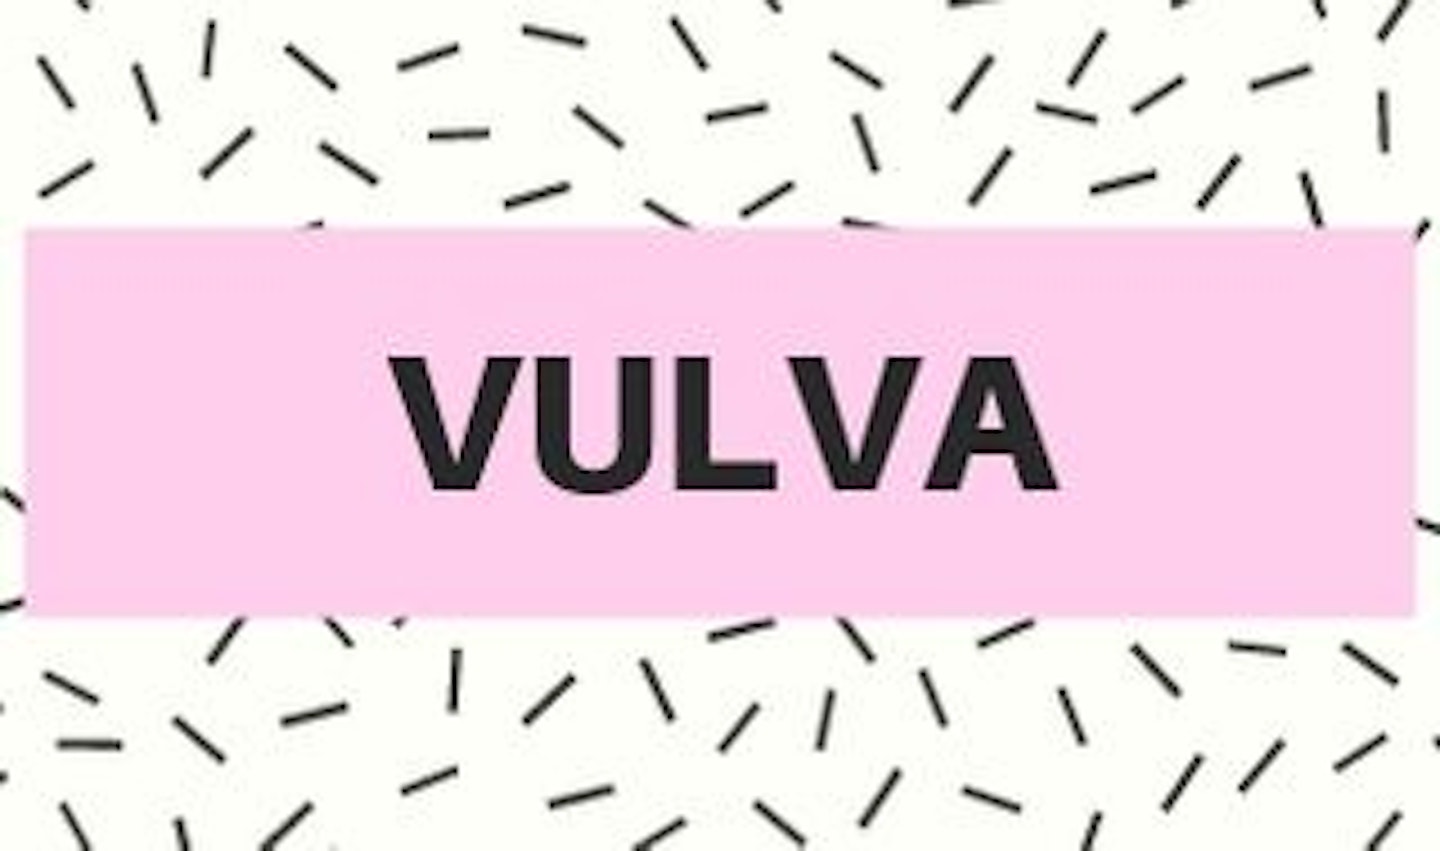 4) Vulva